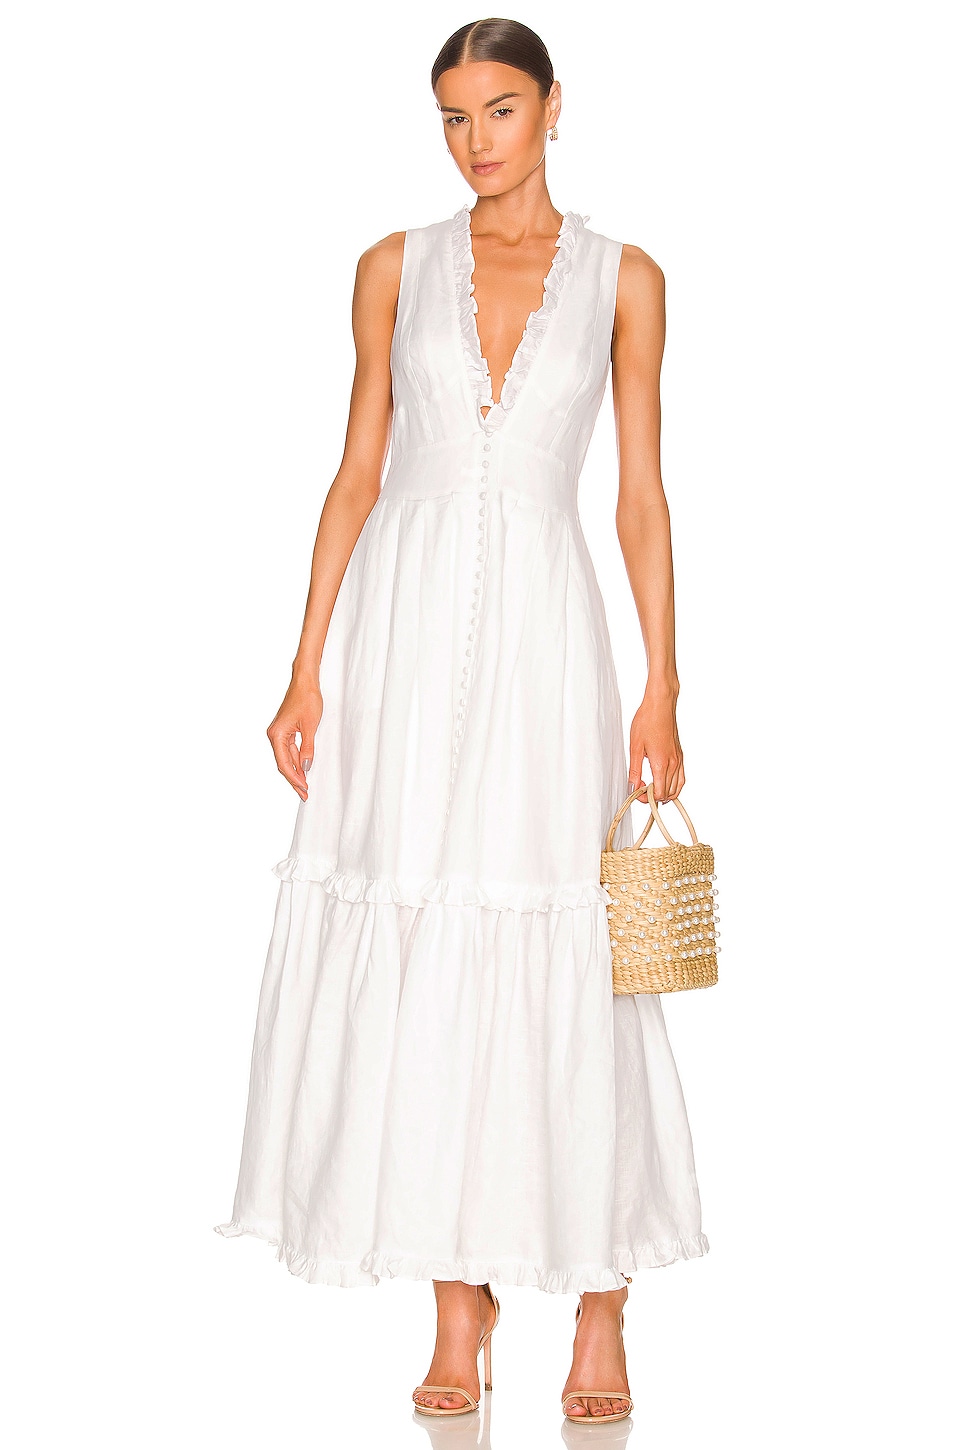 A White Dress For Spring 2023 & Floral Romanticism - Jennysgou